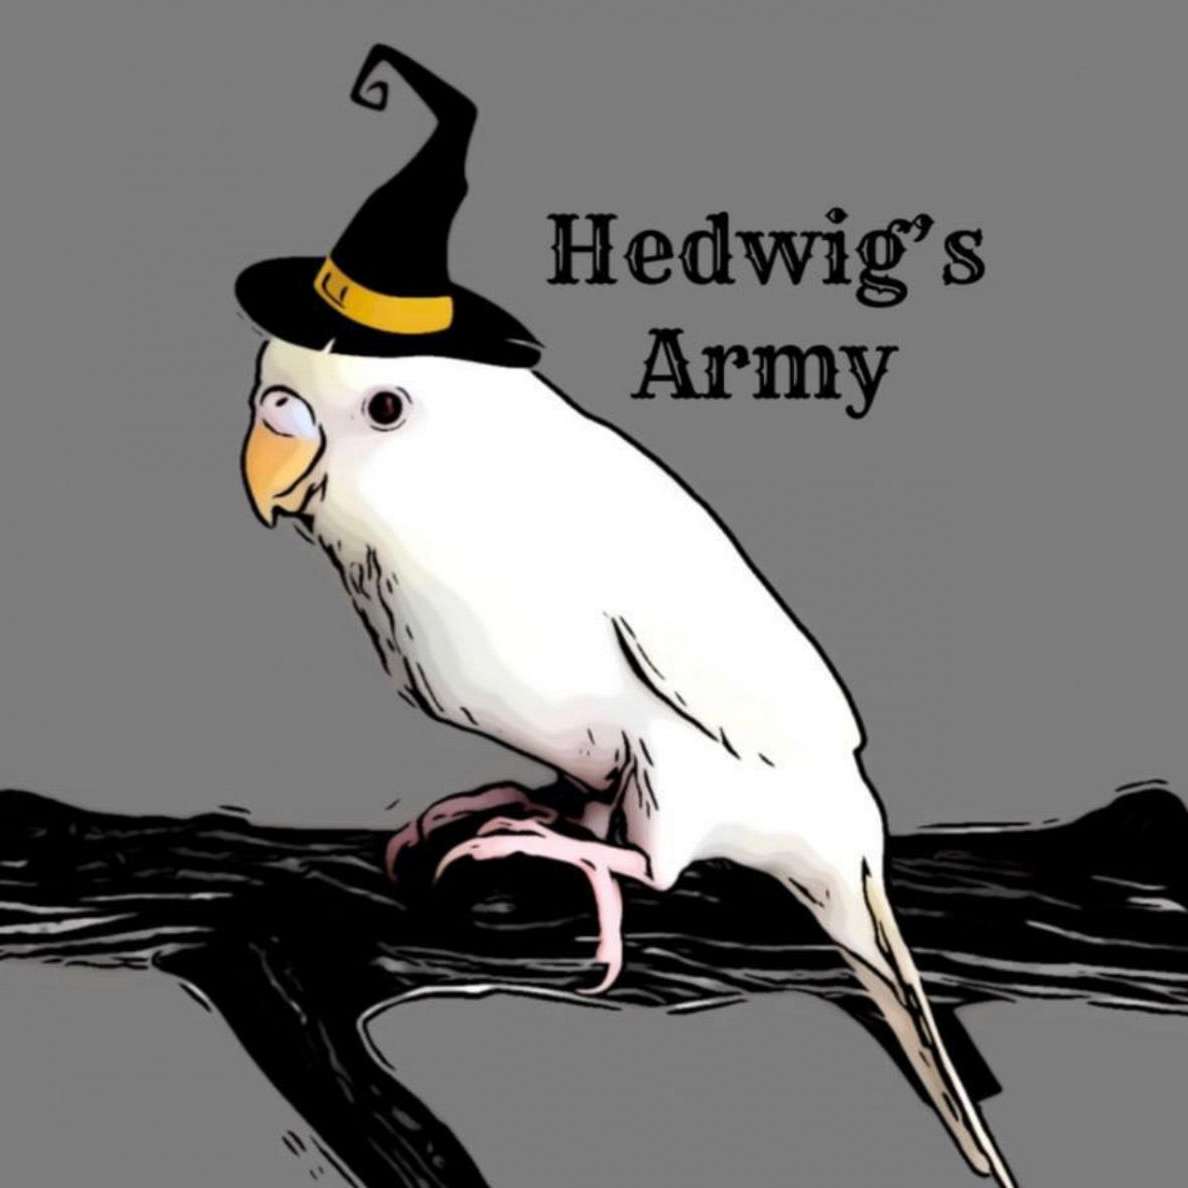 Hedwig's Army Aviary